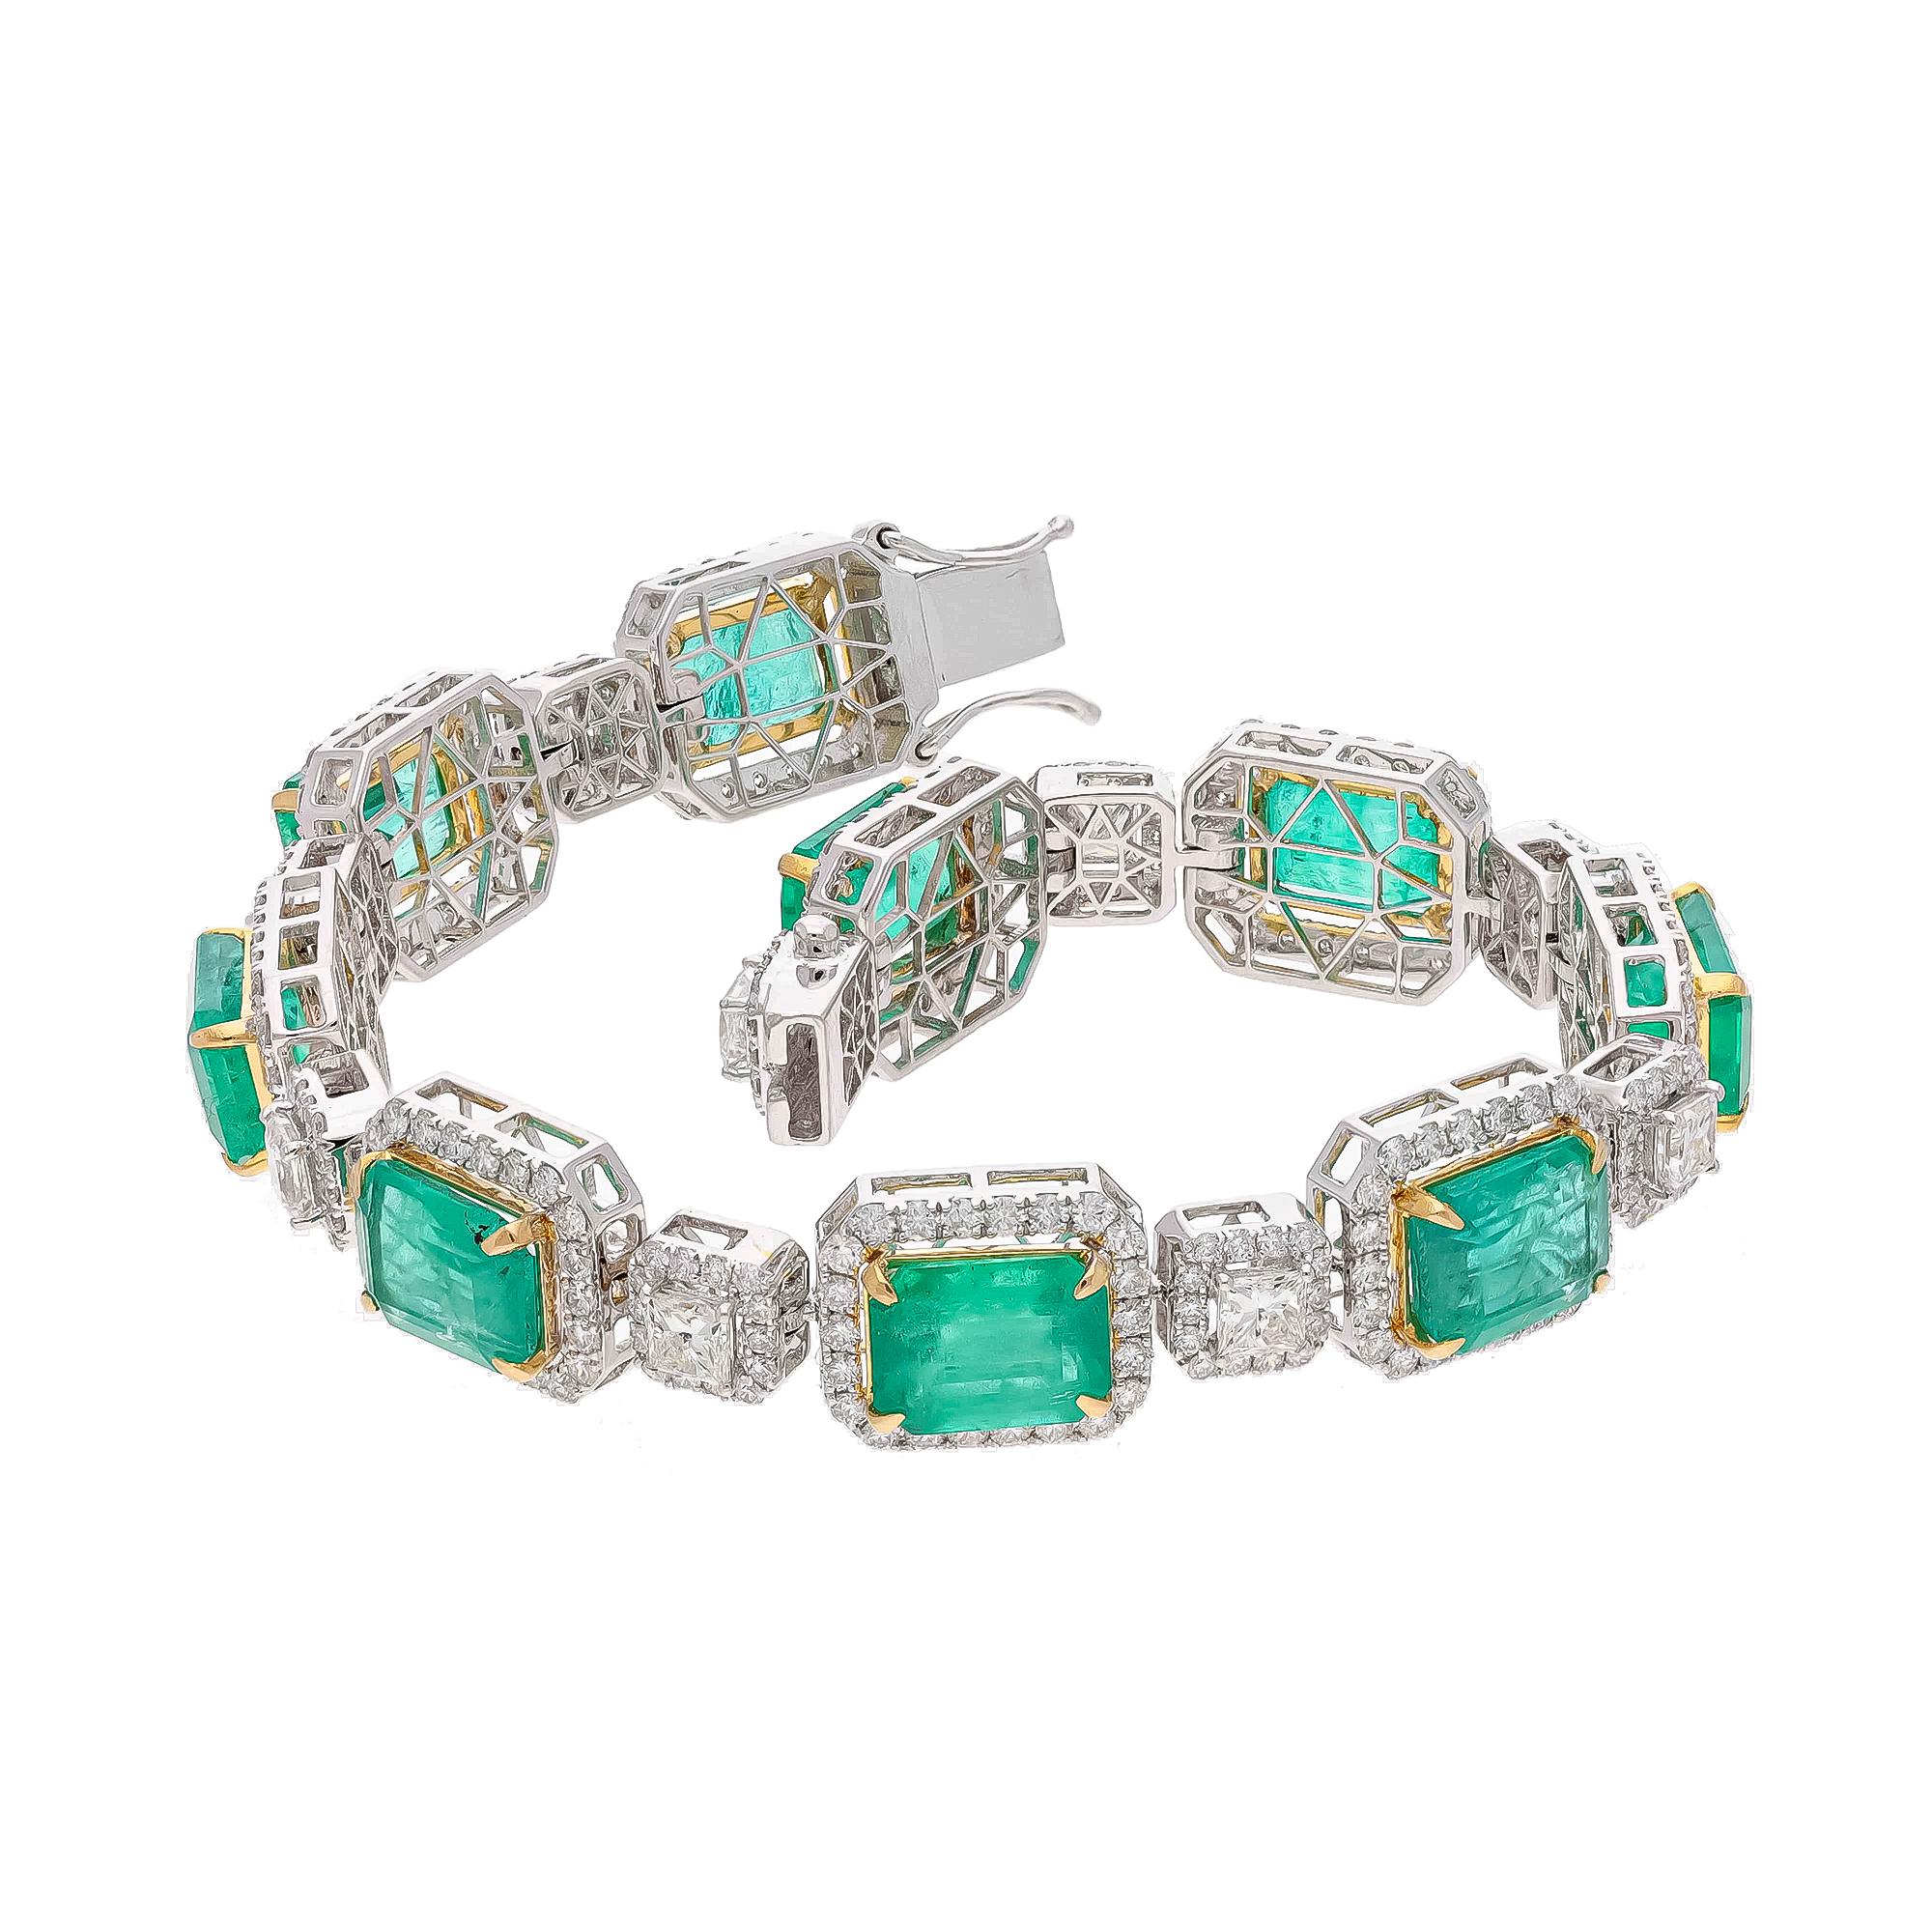 Mixed Cut Natural Zambian Emerald Bracelet with Diamond and 18k Gold